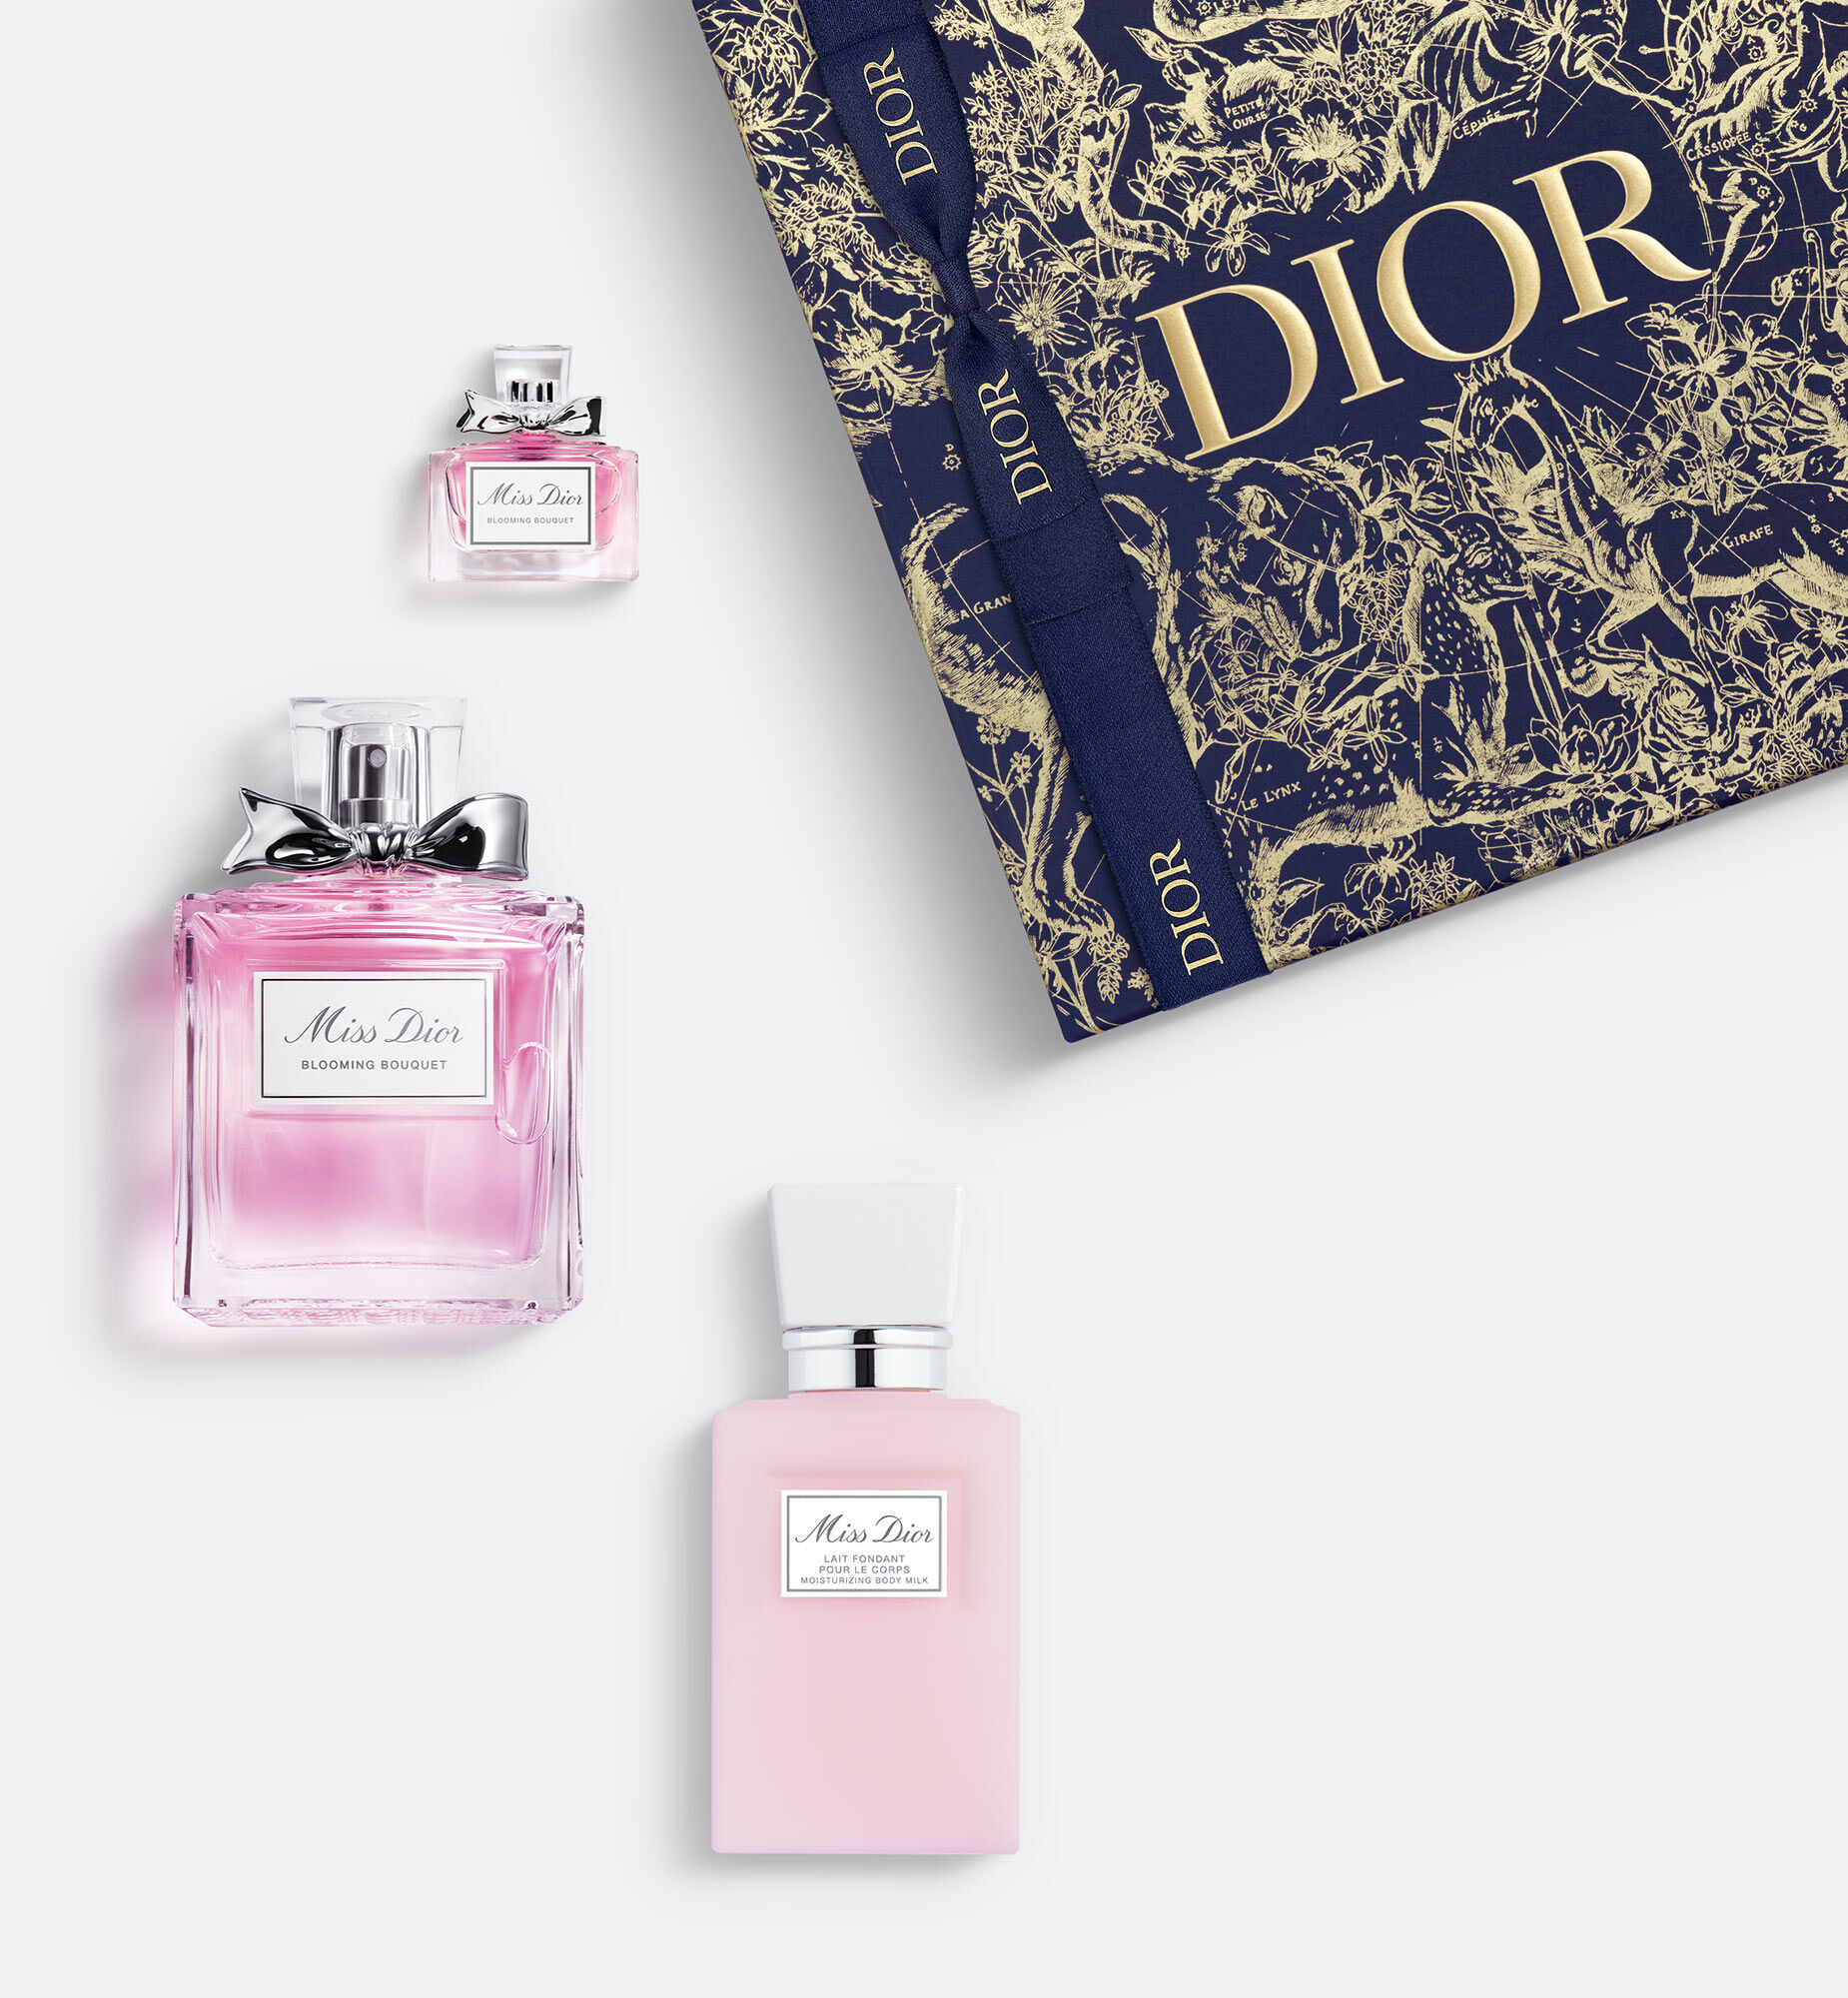 Dior Womens Fragrances  Duty Free Brasil Lojas Aeroporto